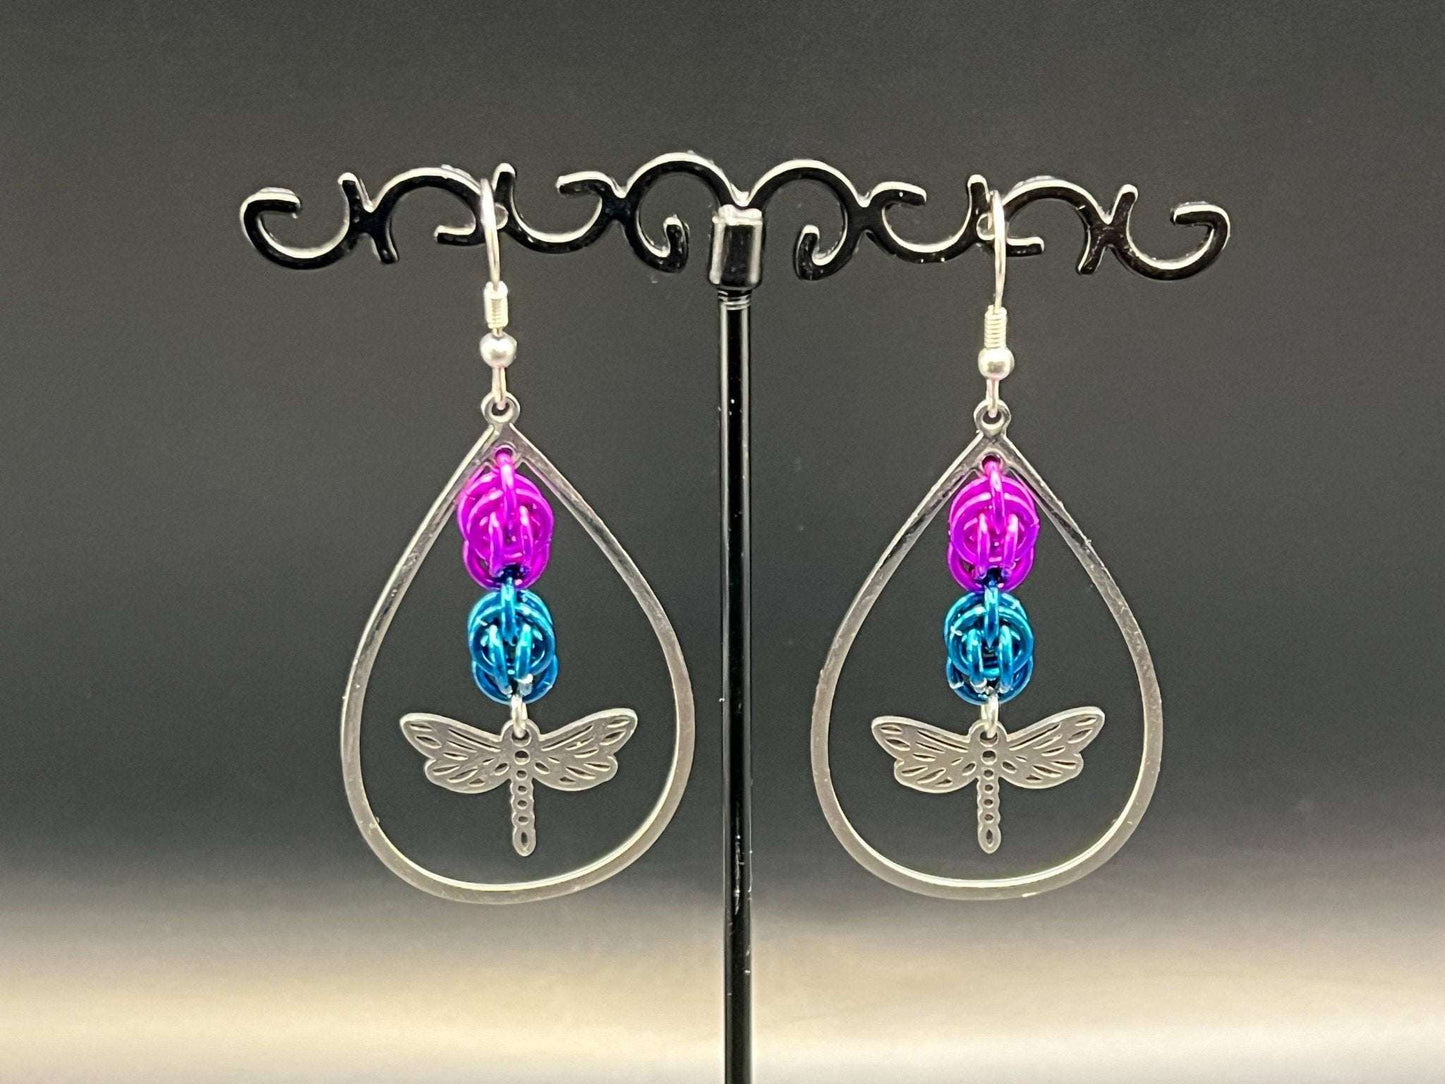 Charmed Teardrop: Earrings with Dragonfly Charm - Megan Gros Designs